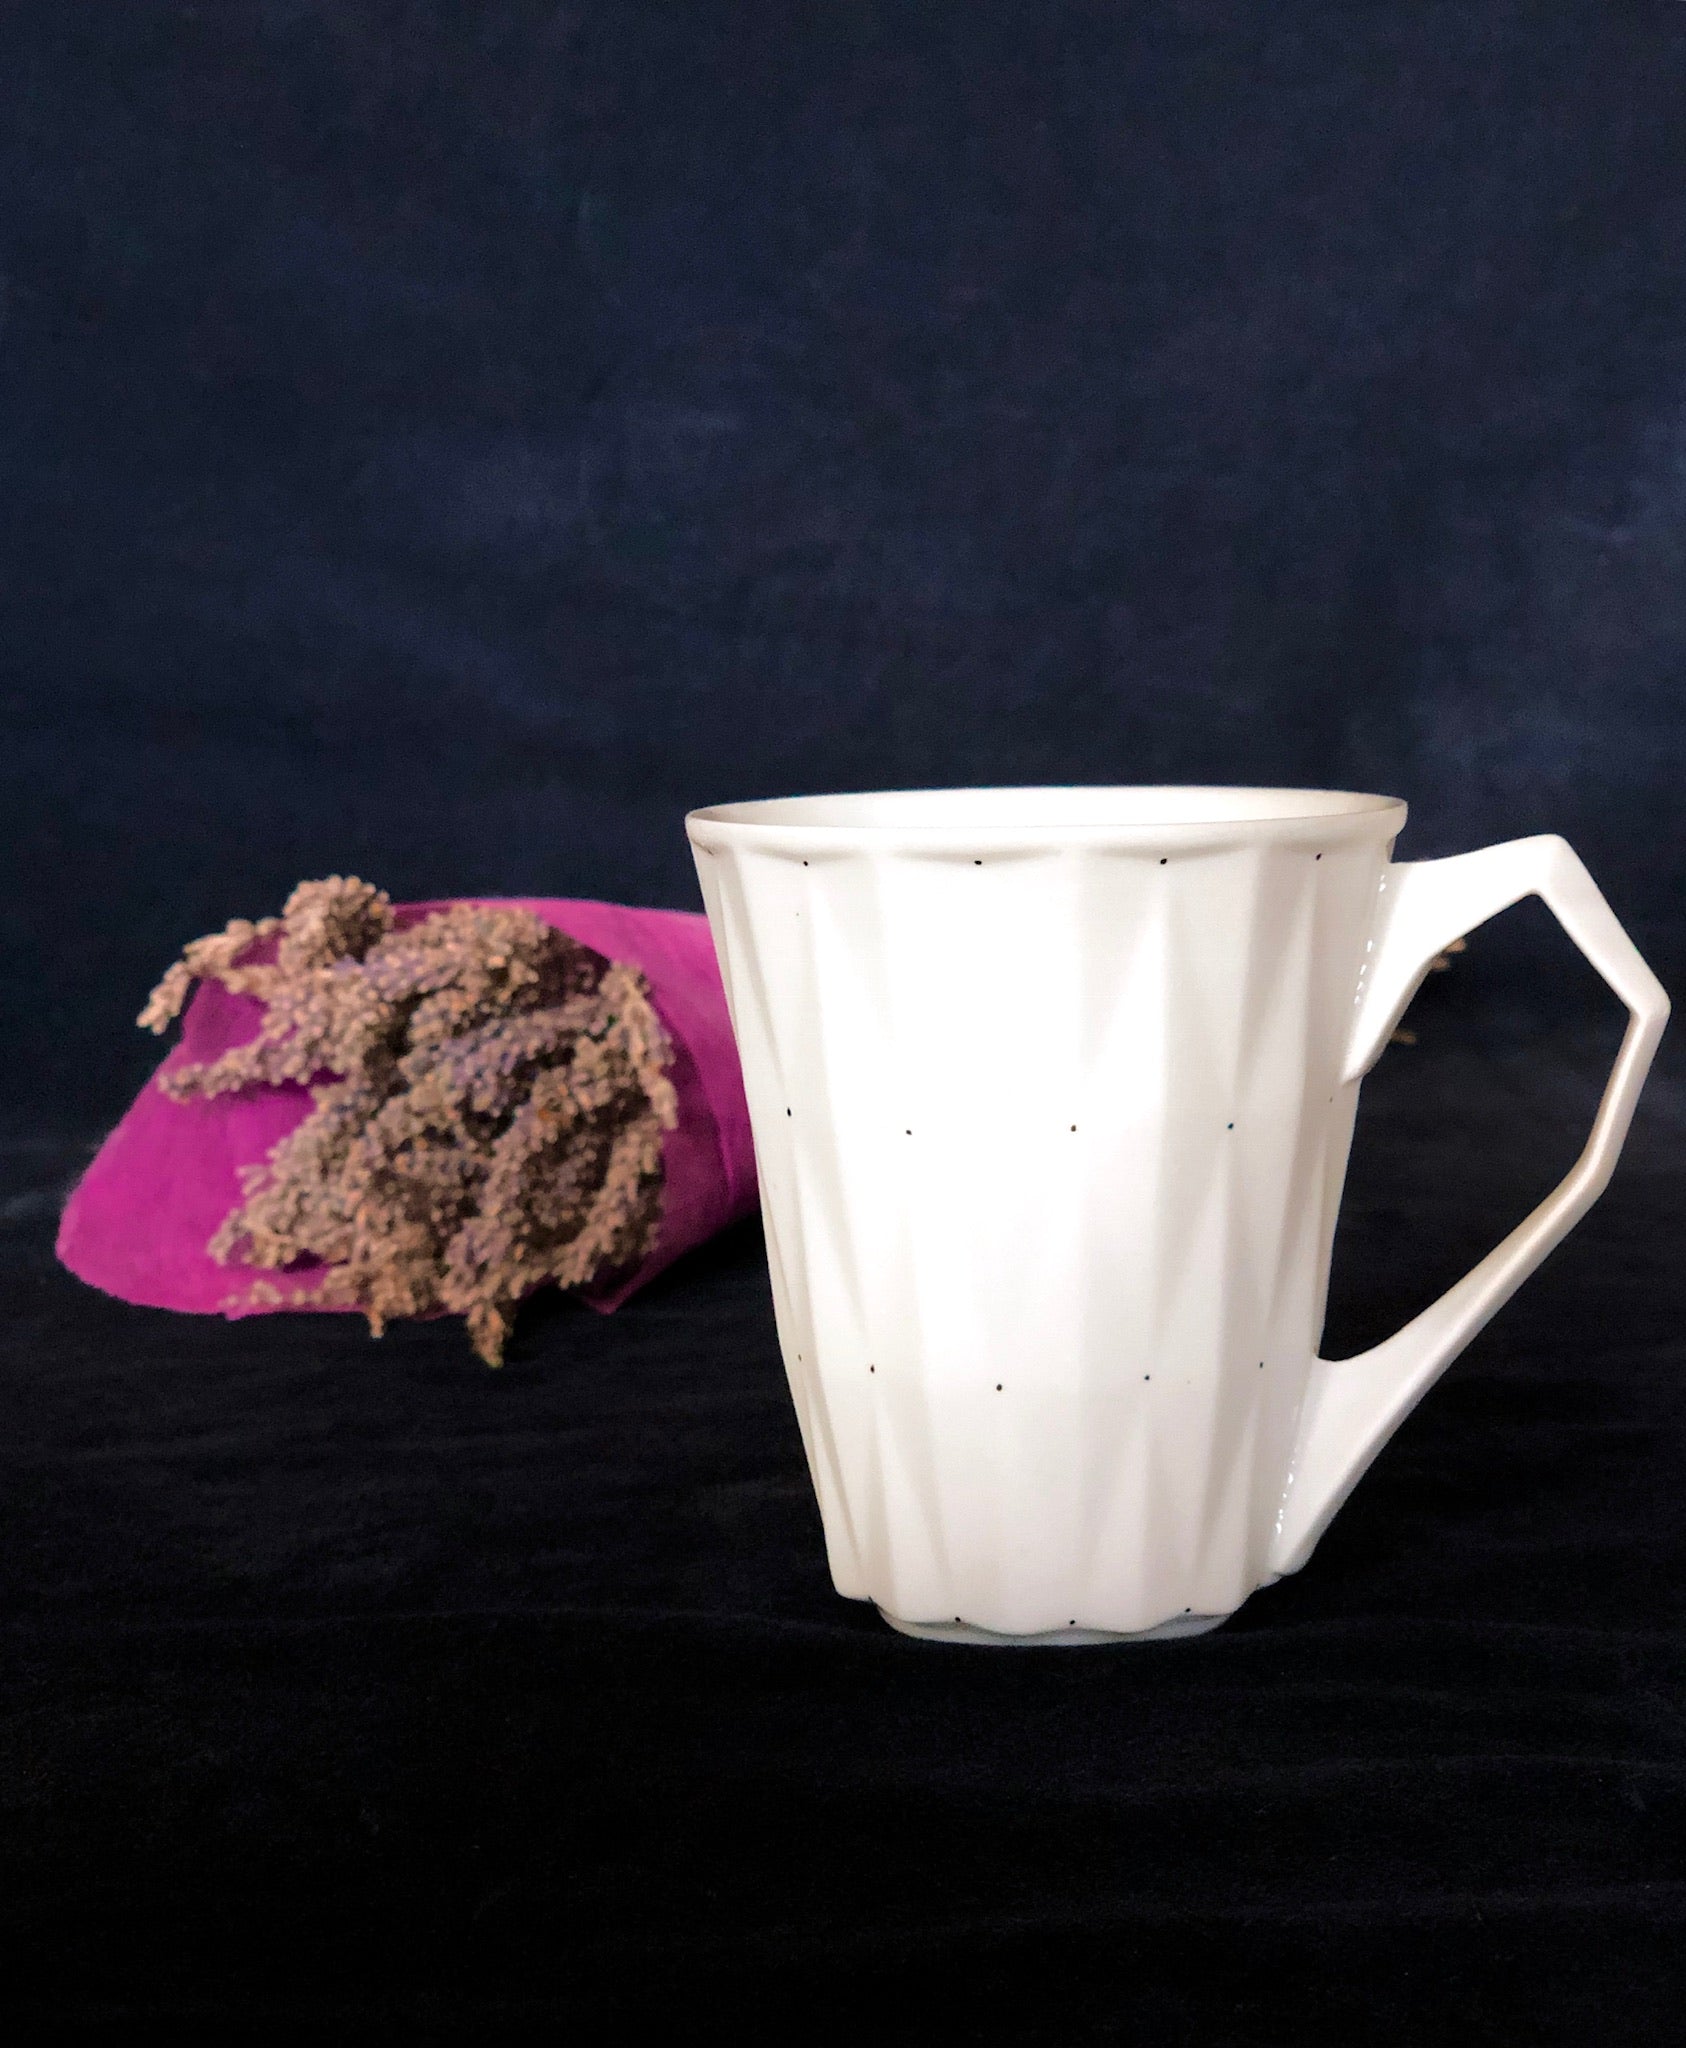 Art deco porcelain mug for coffee or tea